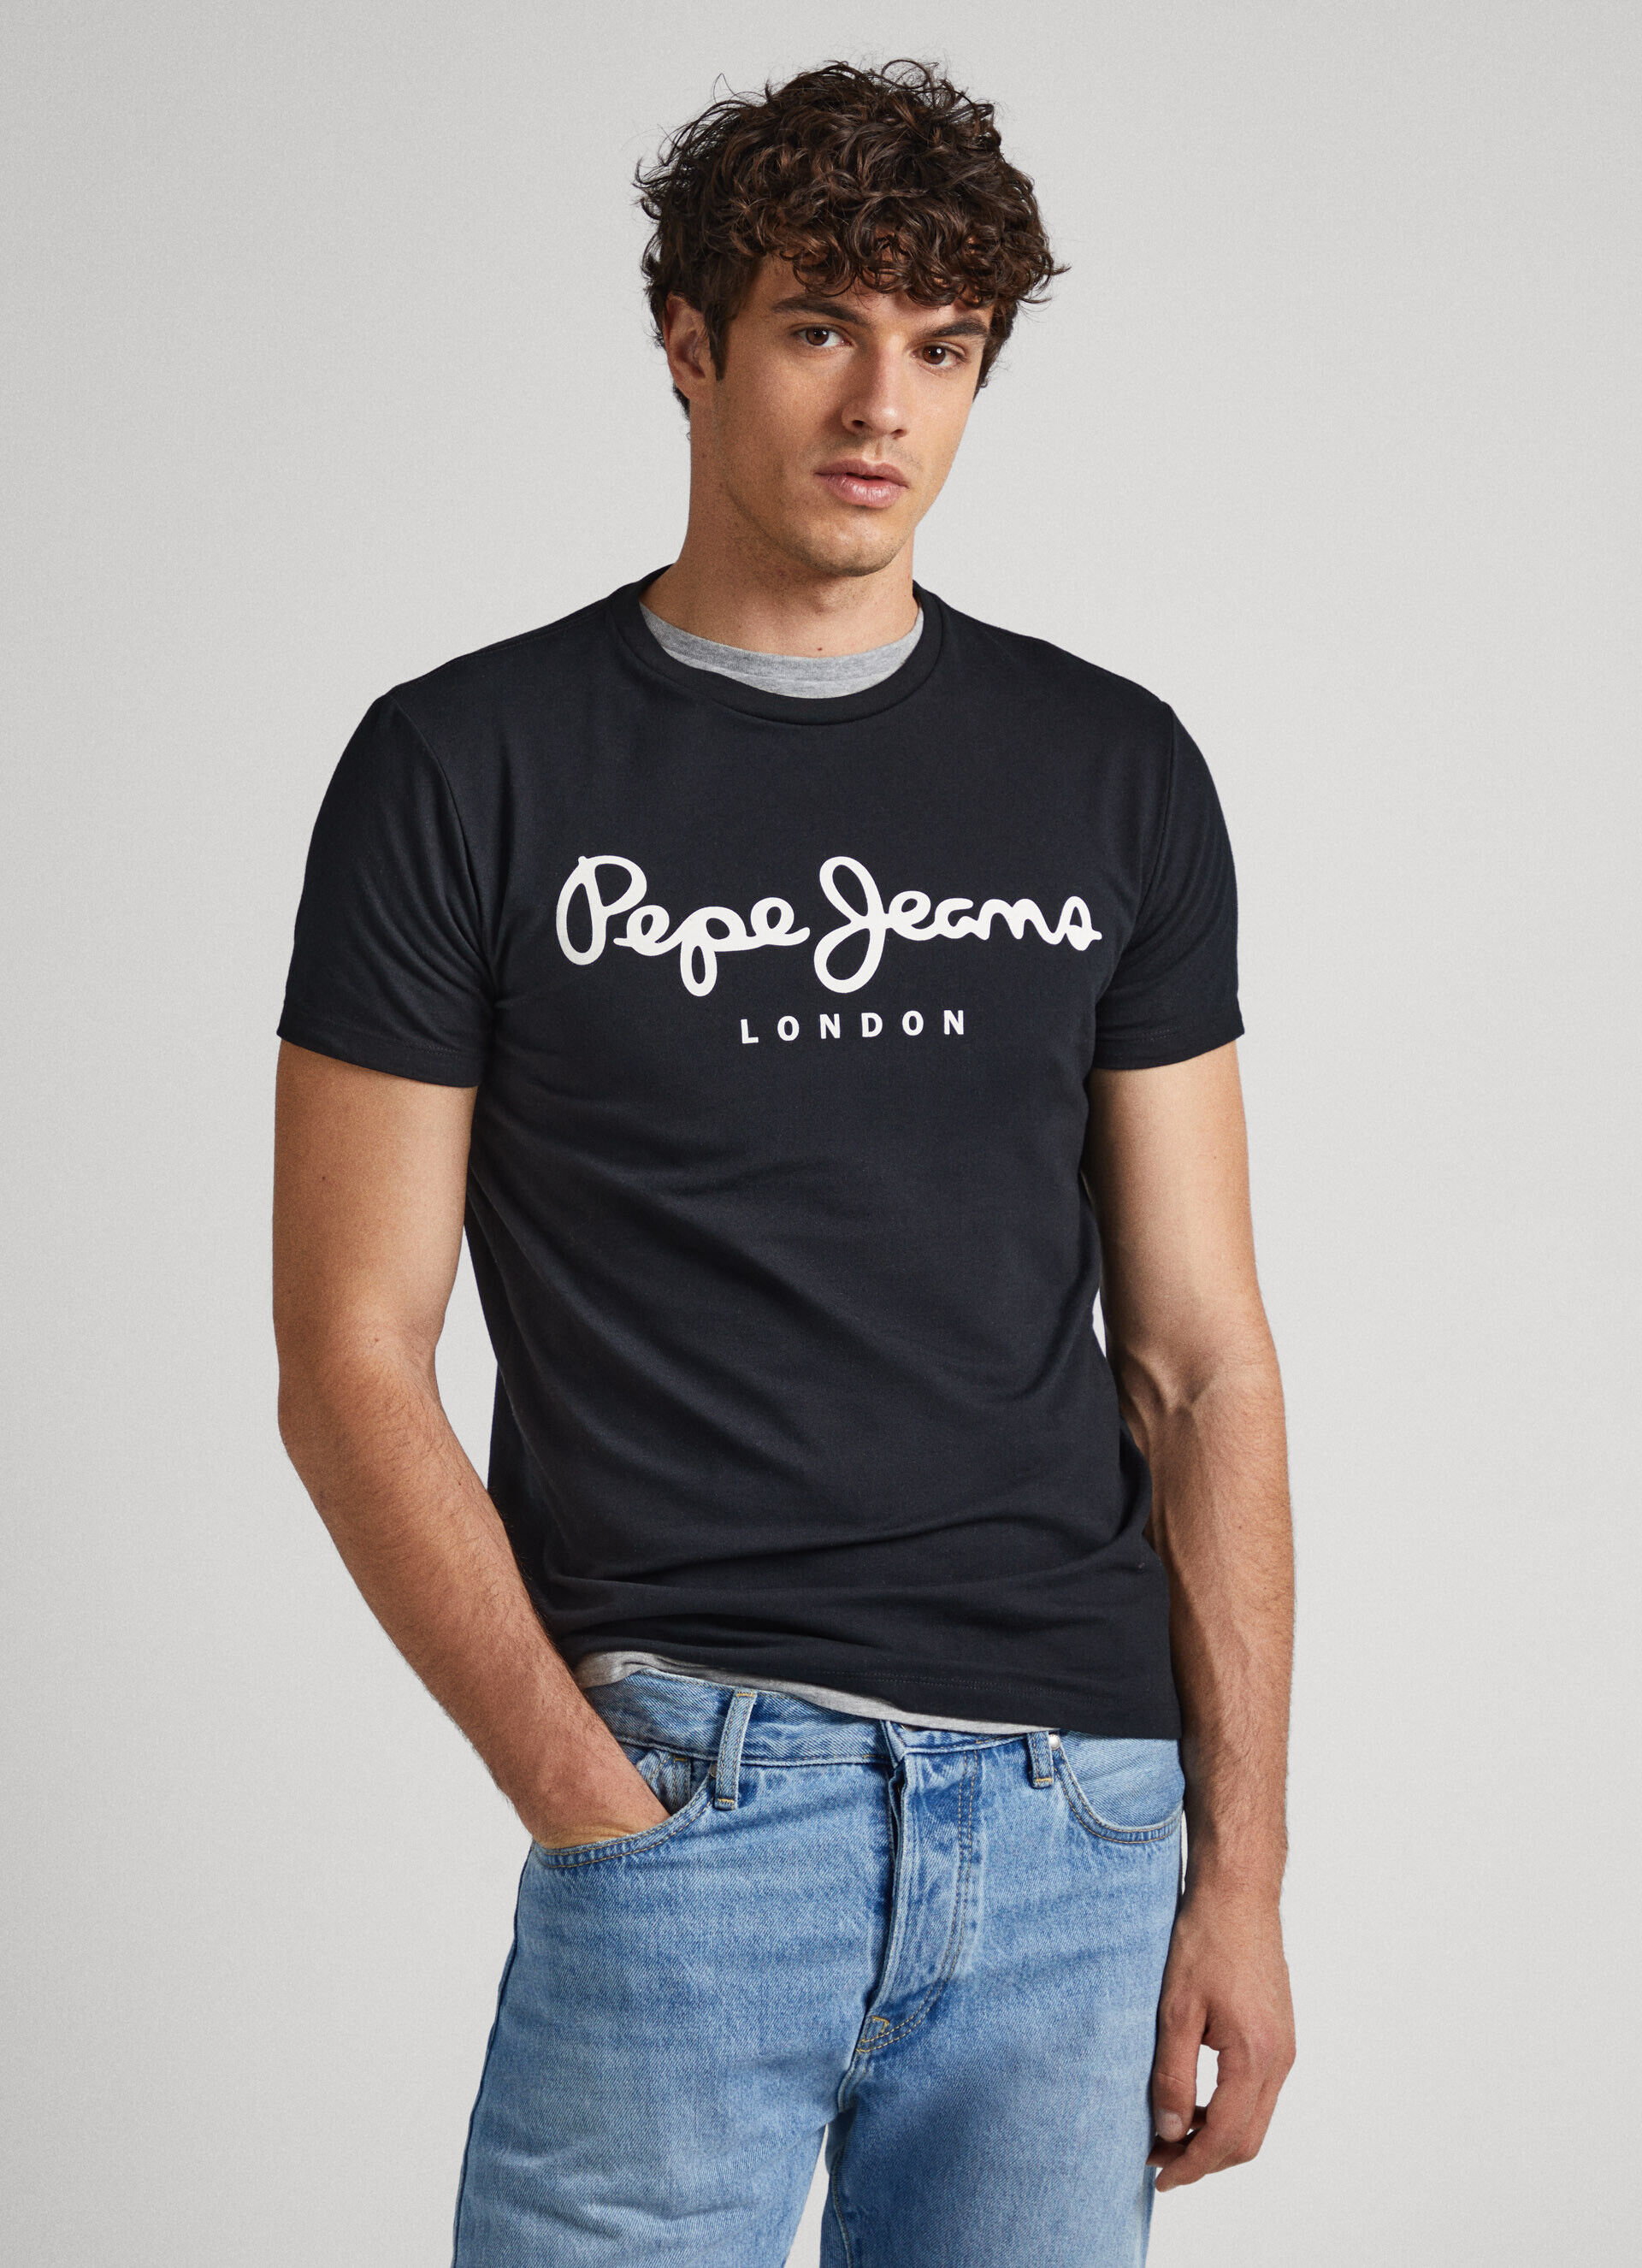 KIDS FASHION Shirts & T-shirts Glitter Brown 14Y discount 83% Pepe Jeans T-shirt 